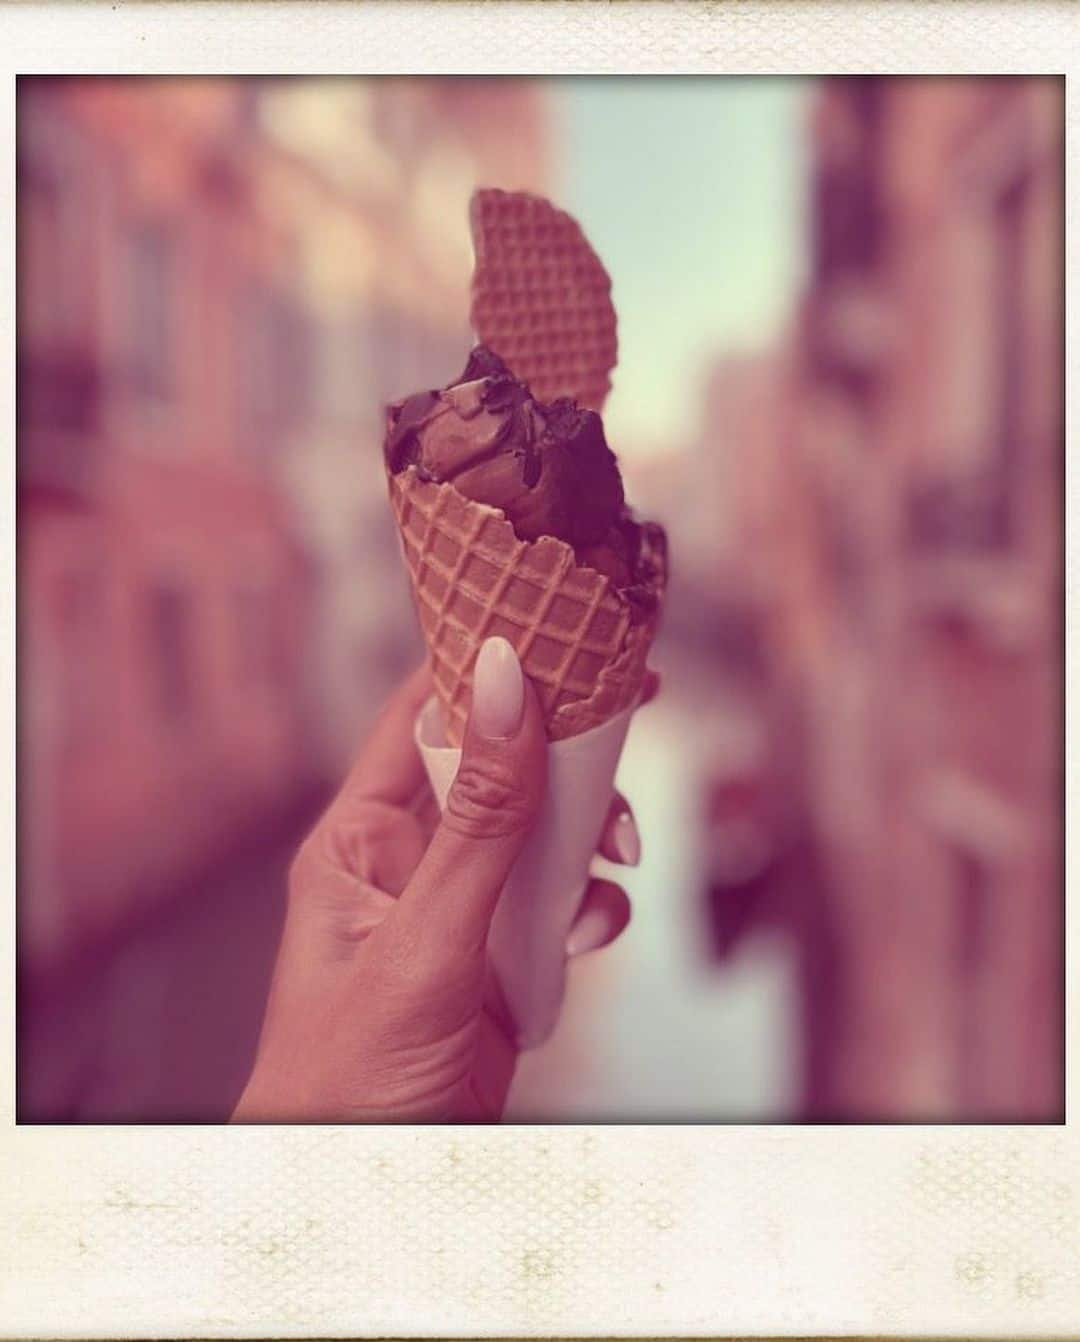 Deepika beats the heat with ice-cream